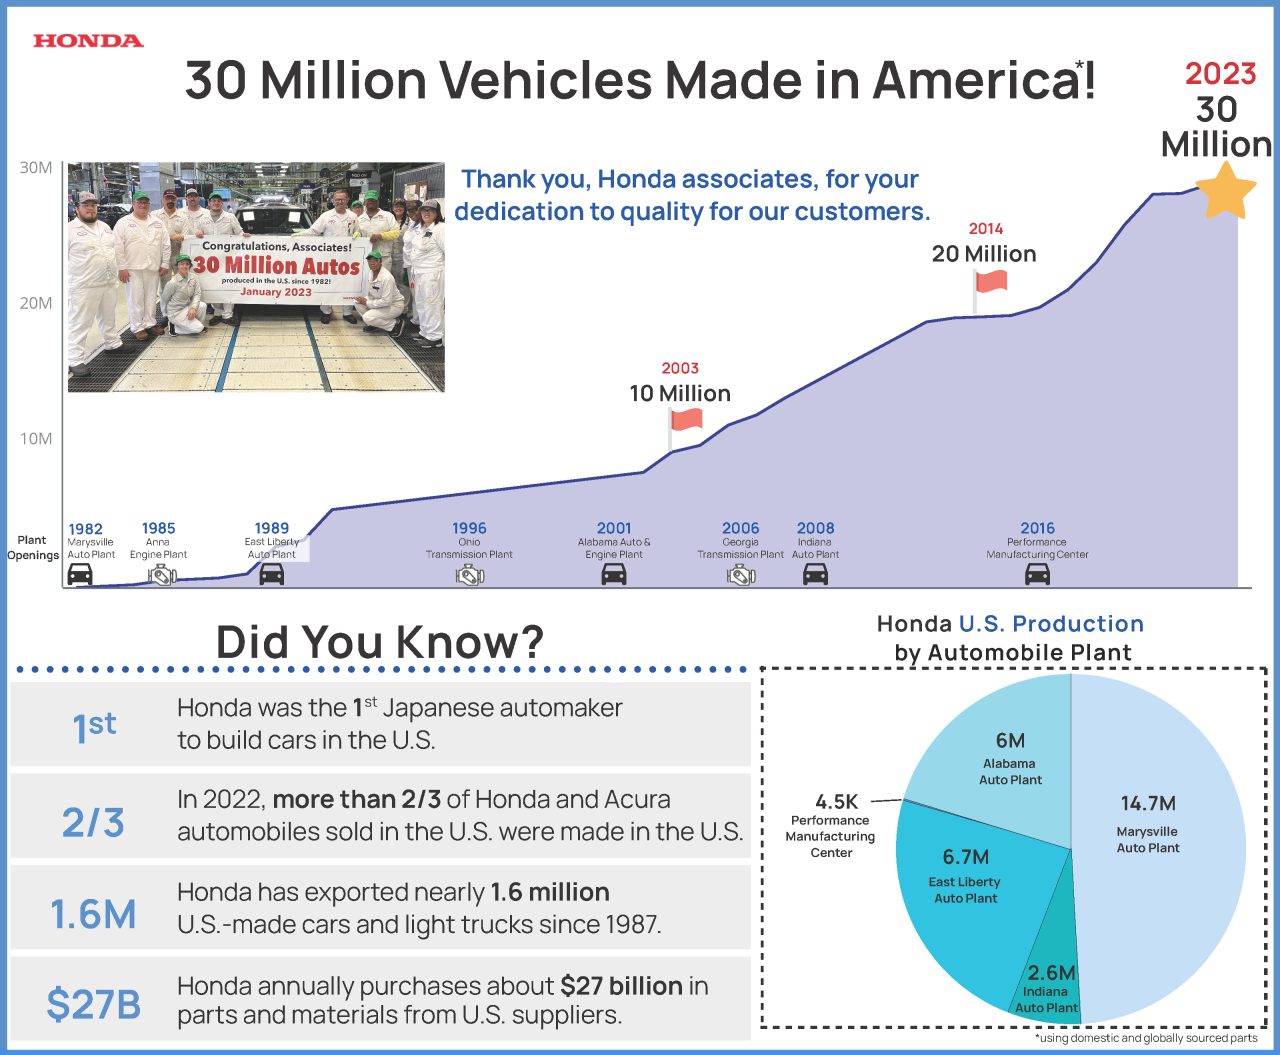 Honda Marks 30 Million Vehicle Production Milestone in the U.S.